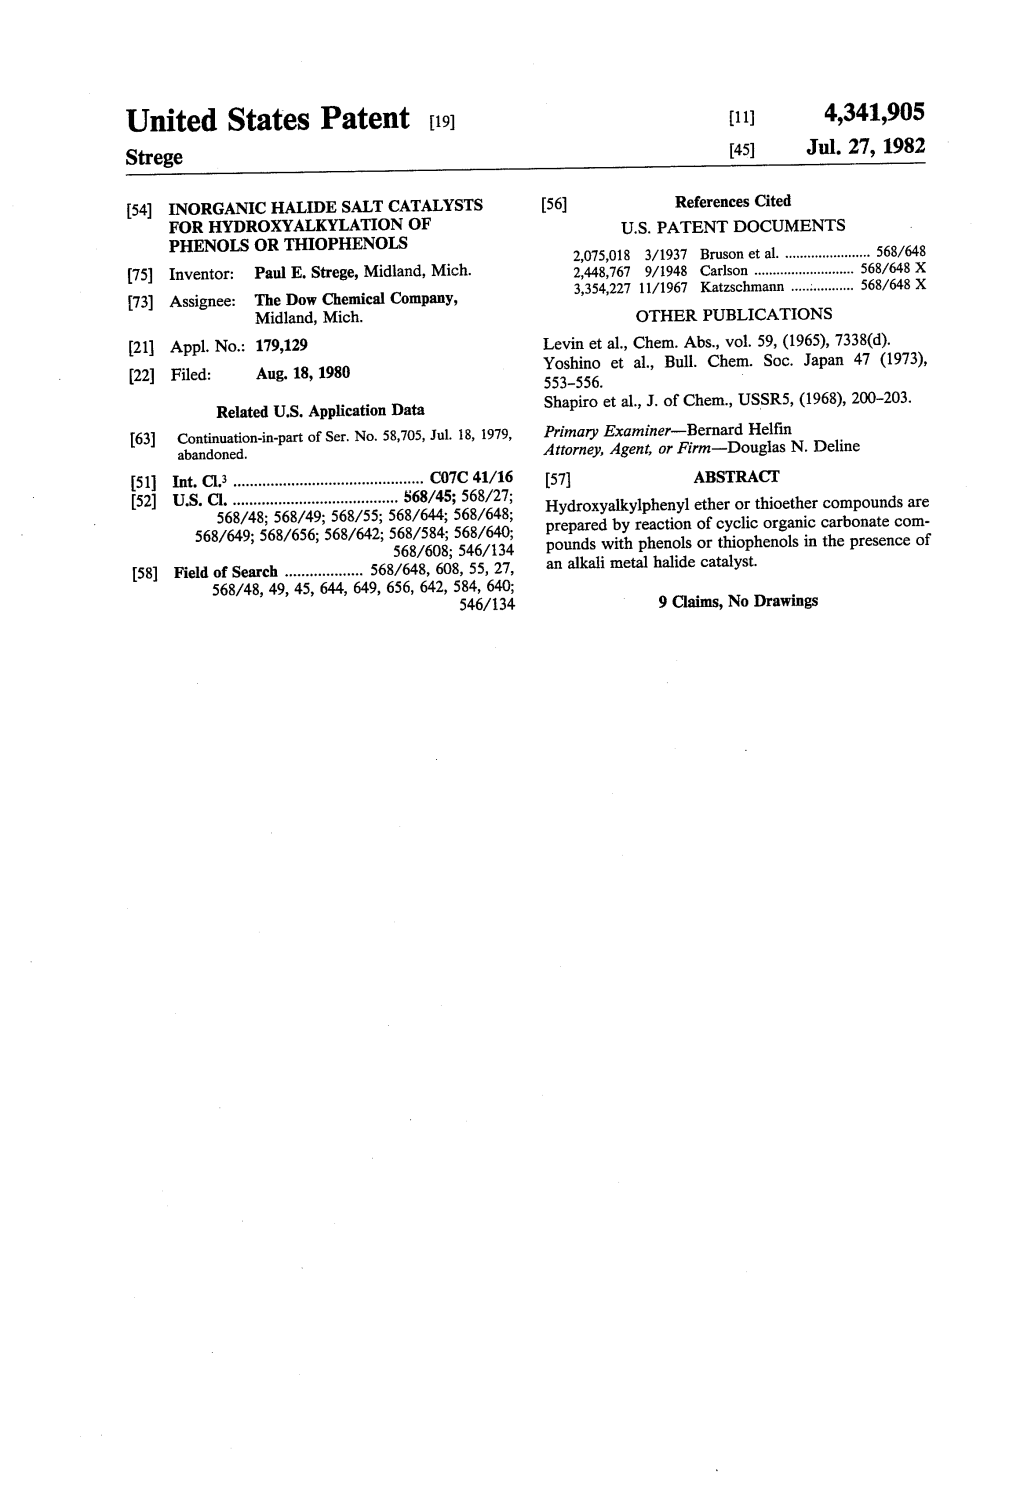 United States Patent (19) (11) 4,341,905 Strege 45) Jul